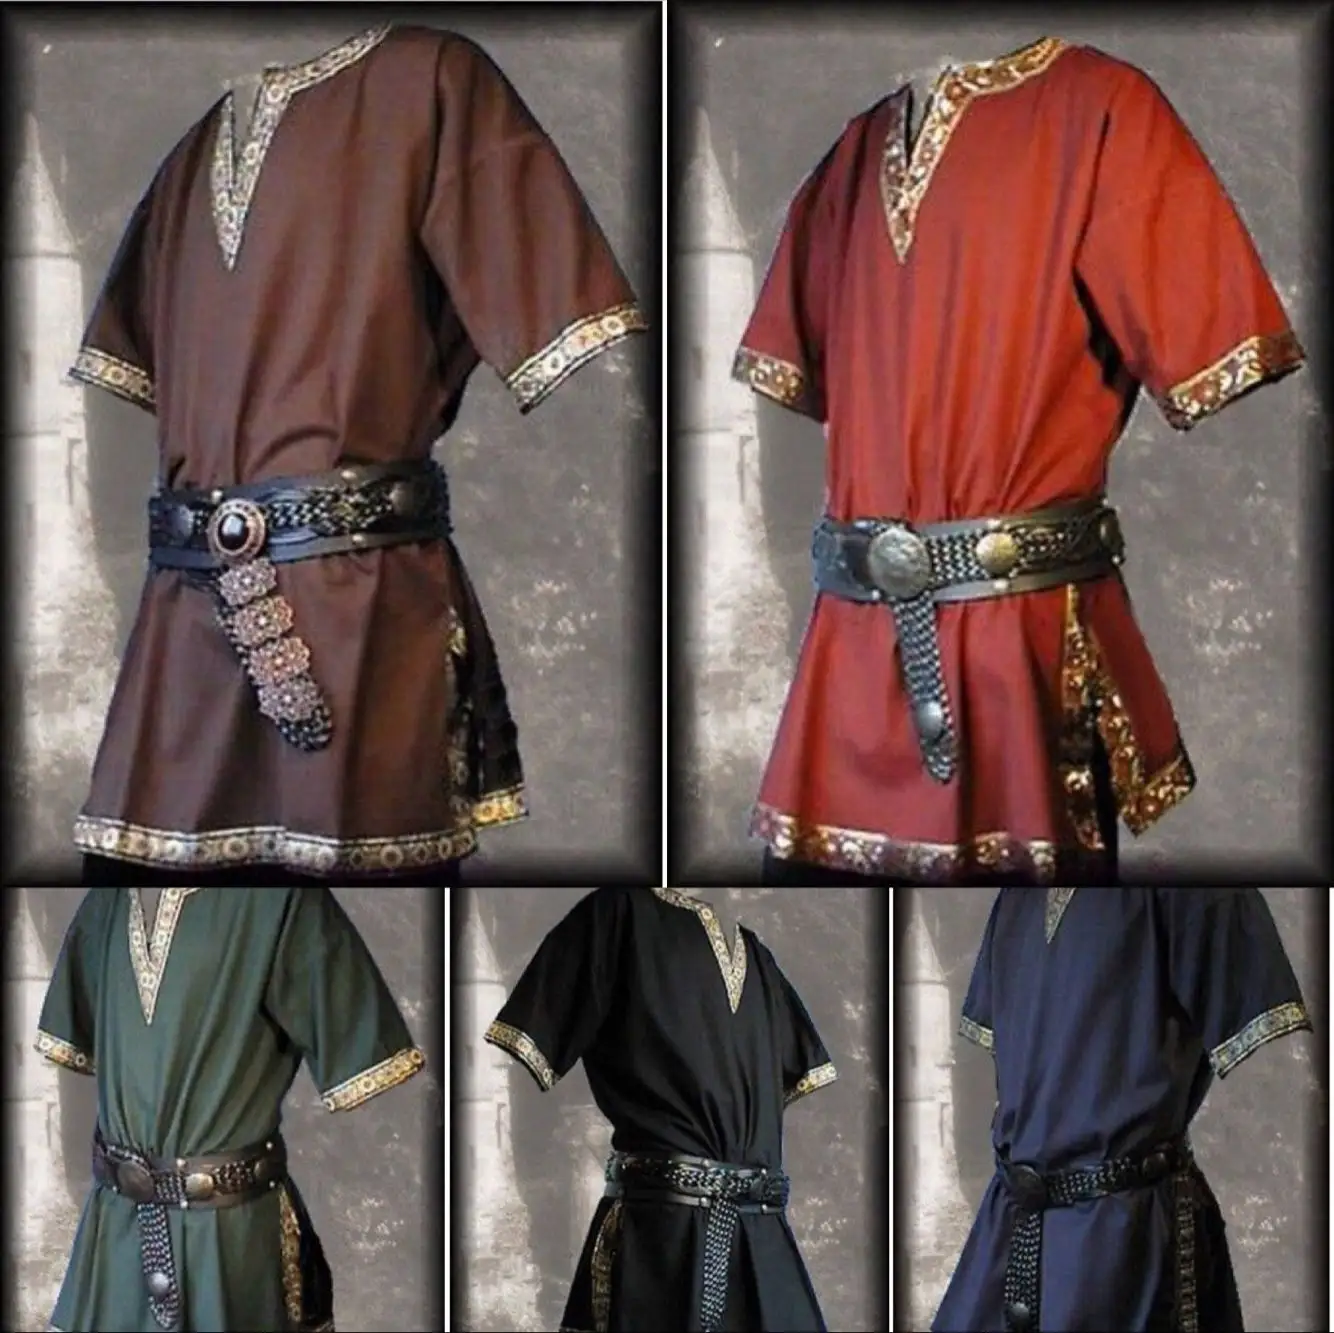 वयस्क पुरुषों मध्यकालीन पुनर्जागरण Grooms समुद्री डाकू Reenactment टोने Larp कॉस्टयूम वी गर्दन शर्ट मध्यम आयु Cosplay शीर्ष पुरुषों के लिए